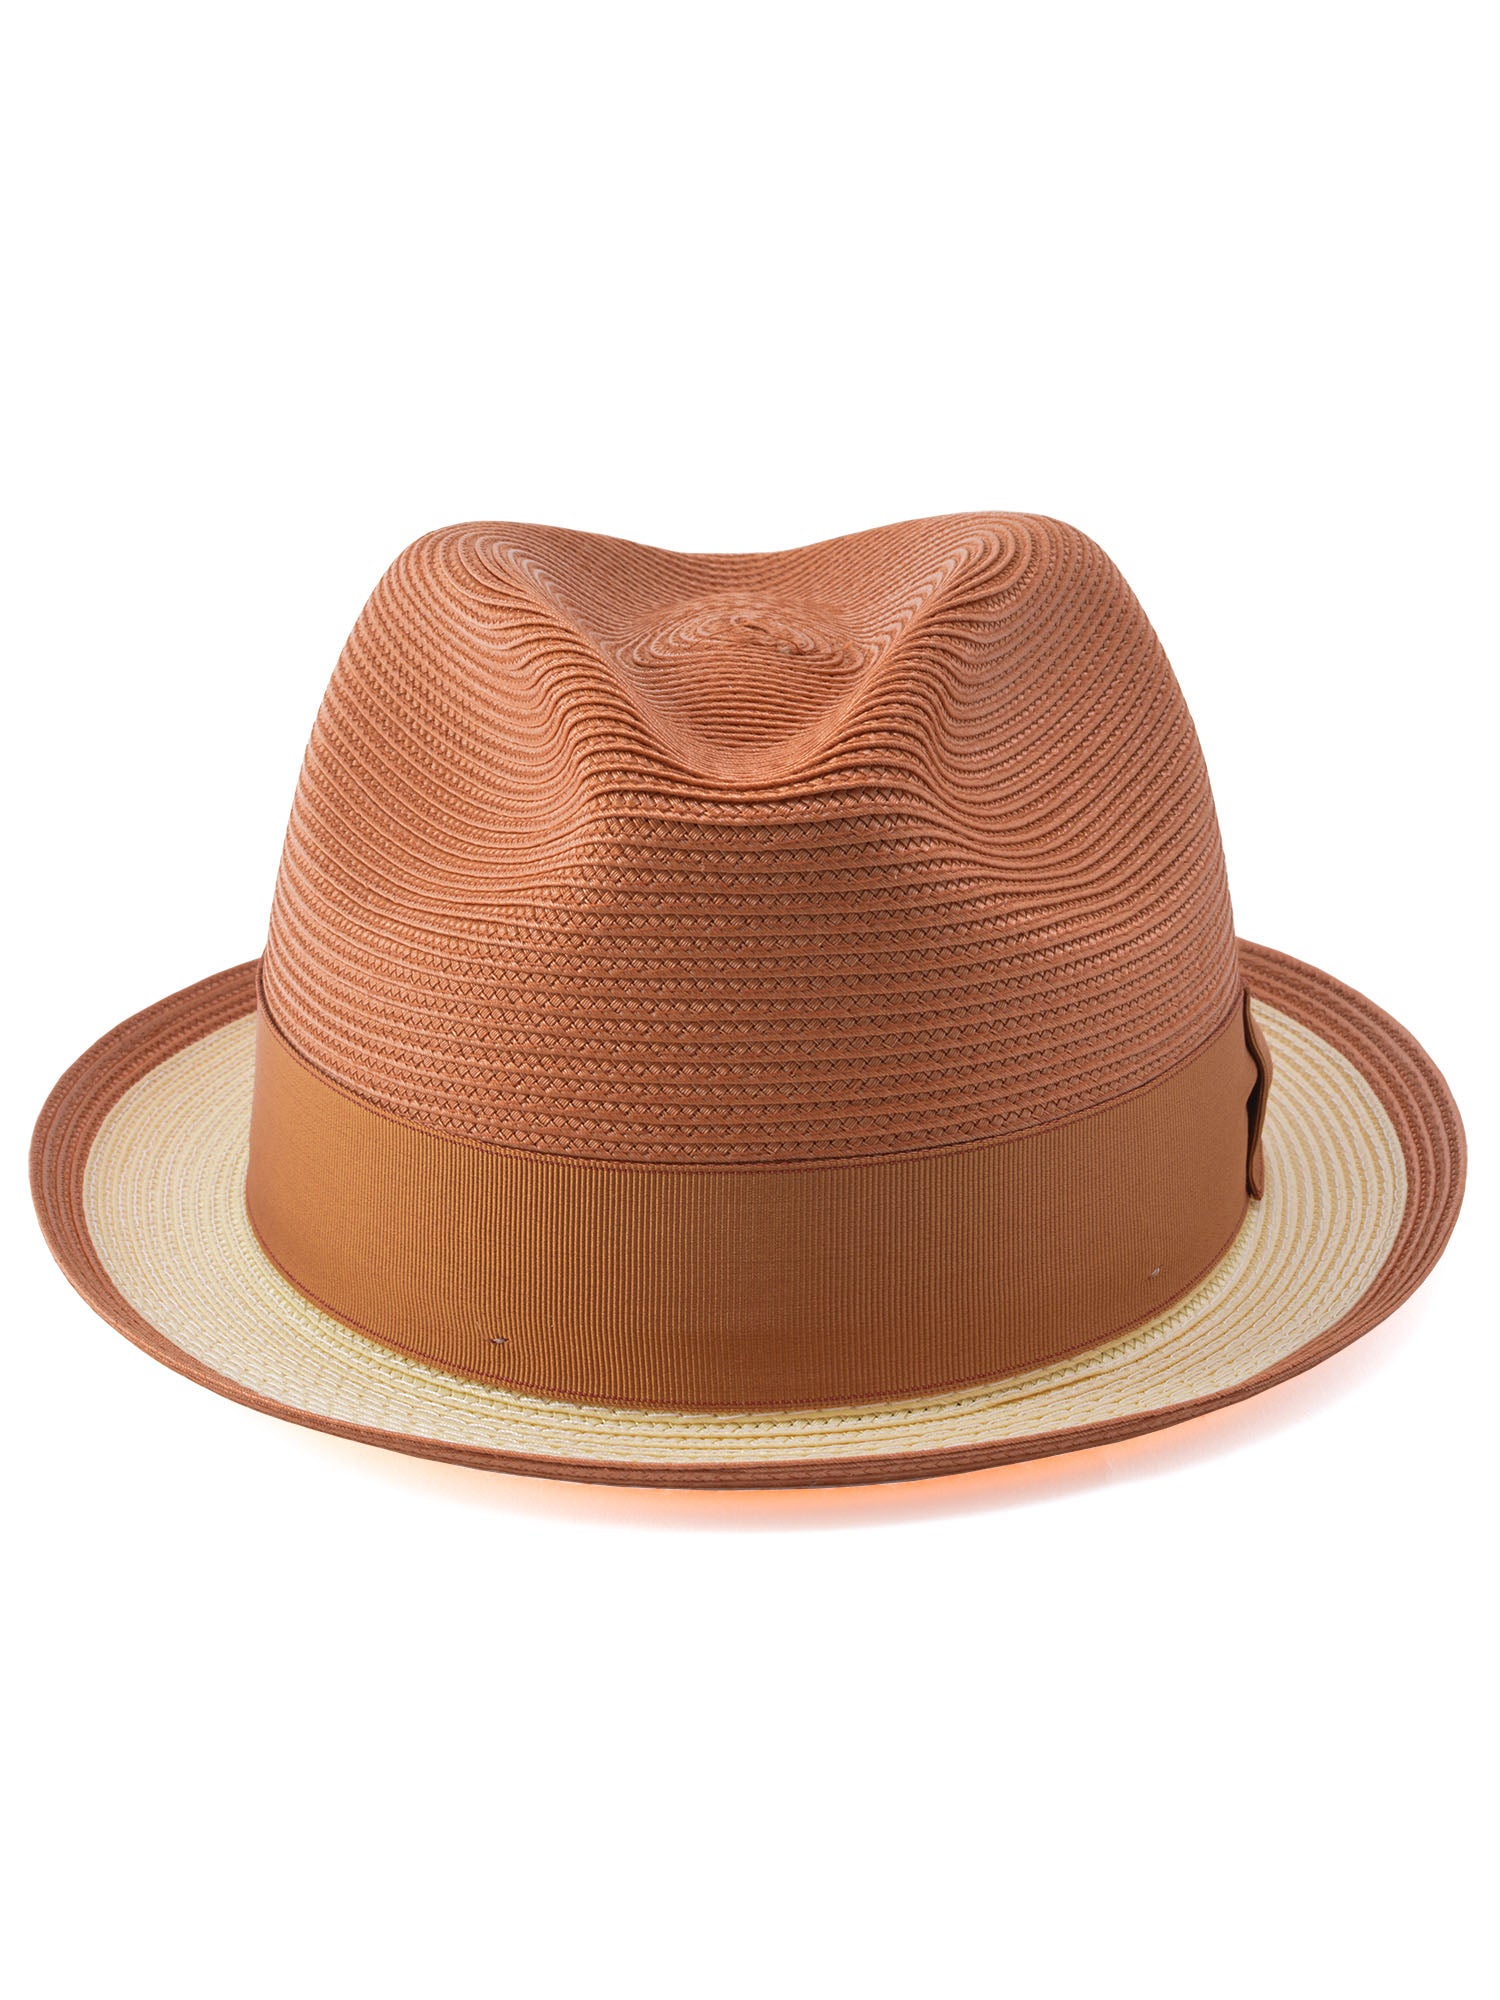 Dobbs Theadore Milan Straw Fedora Hat